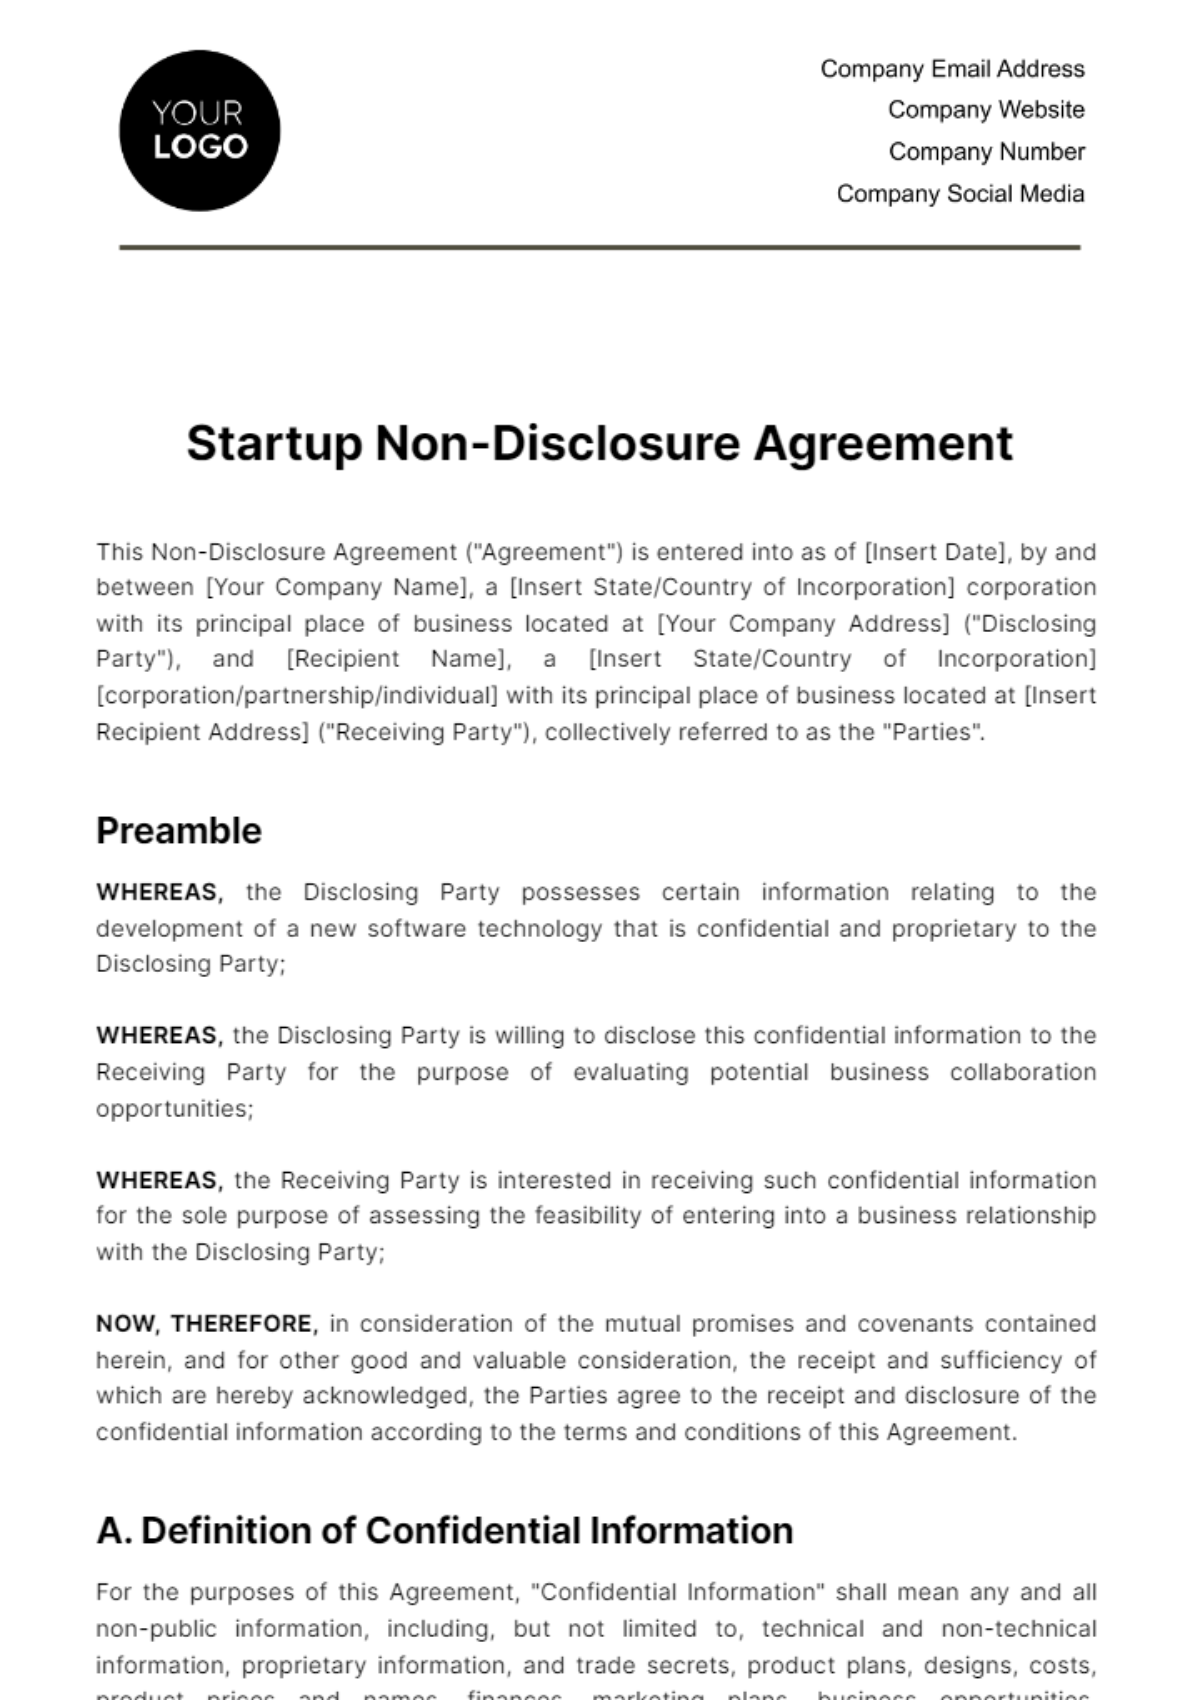 Startup Non-Disclosure Agreement (NDA) Template